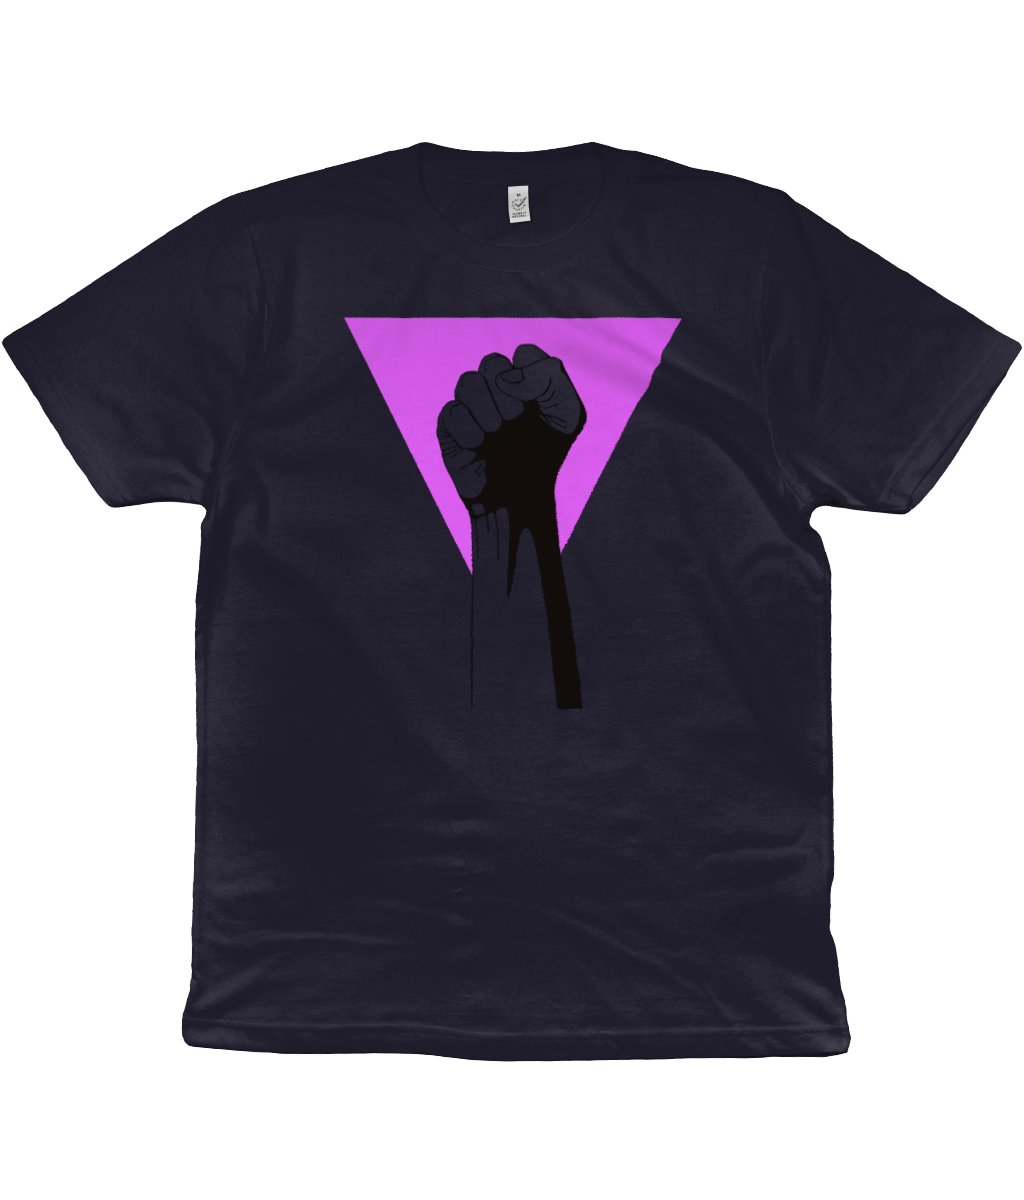 Pink Triangle/Resist Organic Cotton T-Shirt